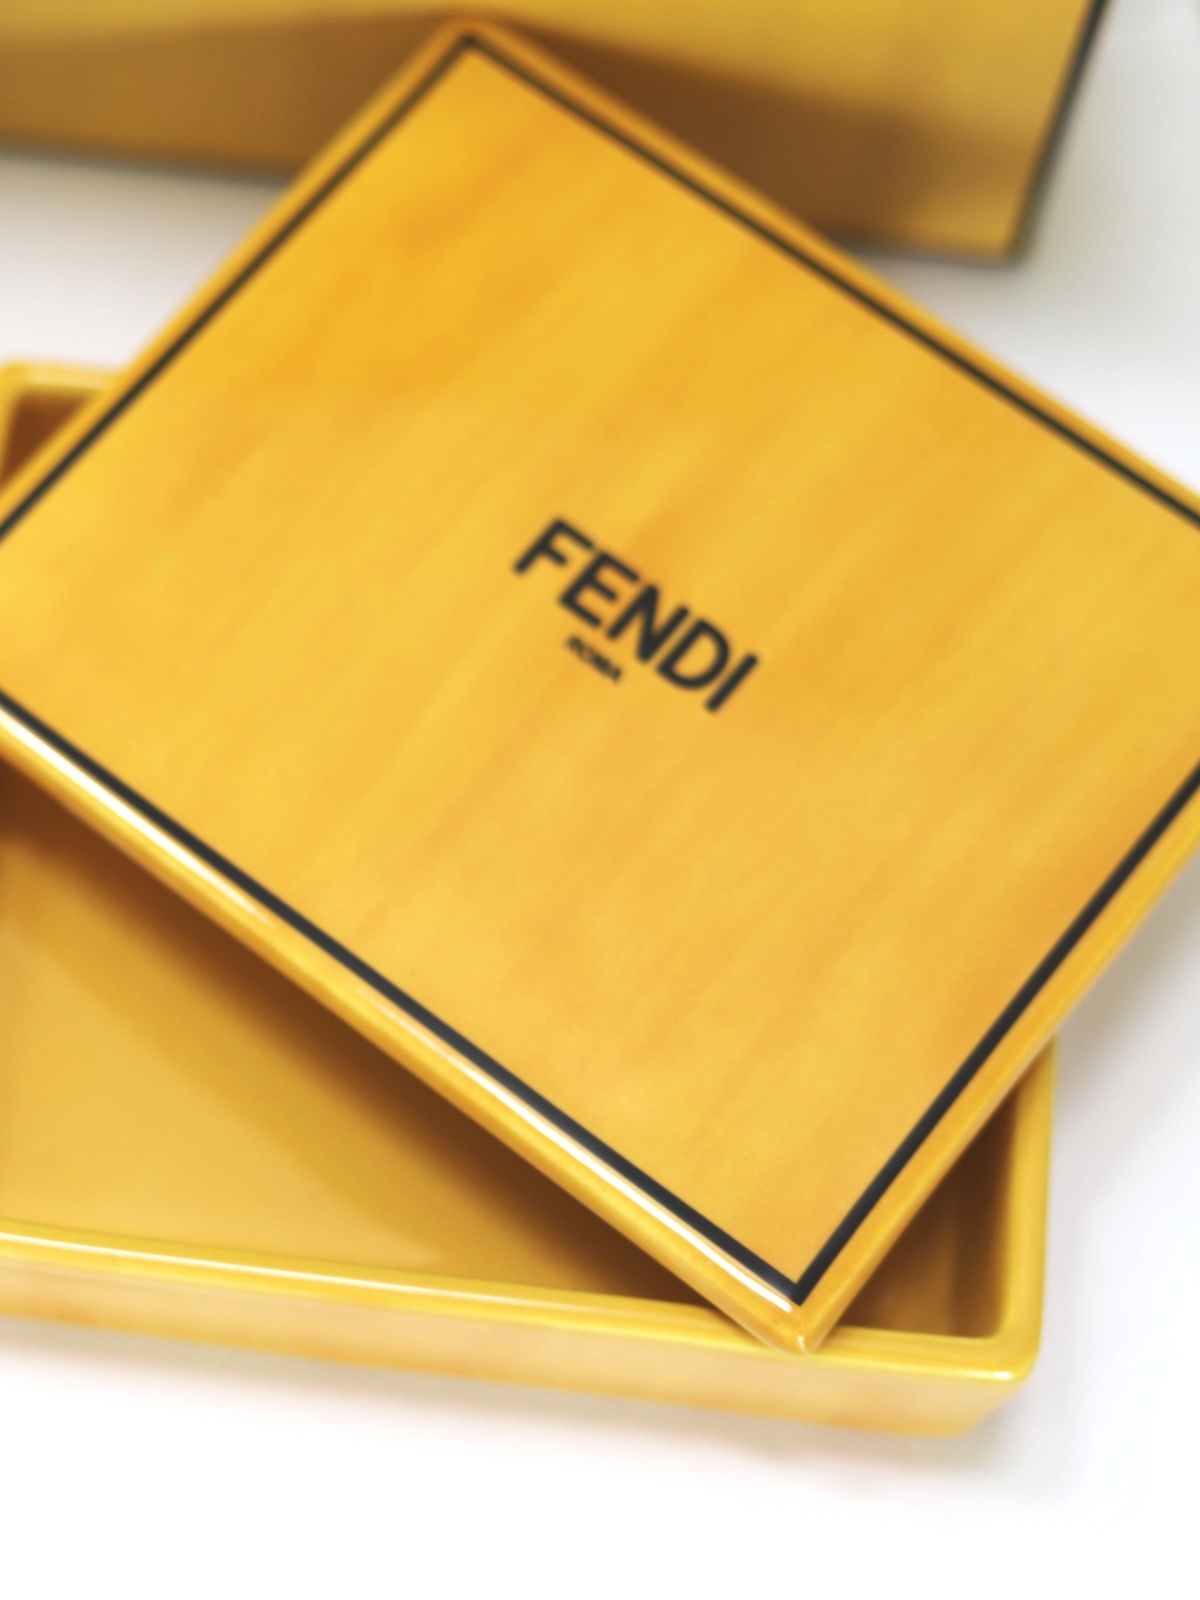 Fendi Yellow and Black Porcelain Box 